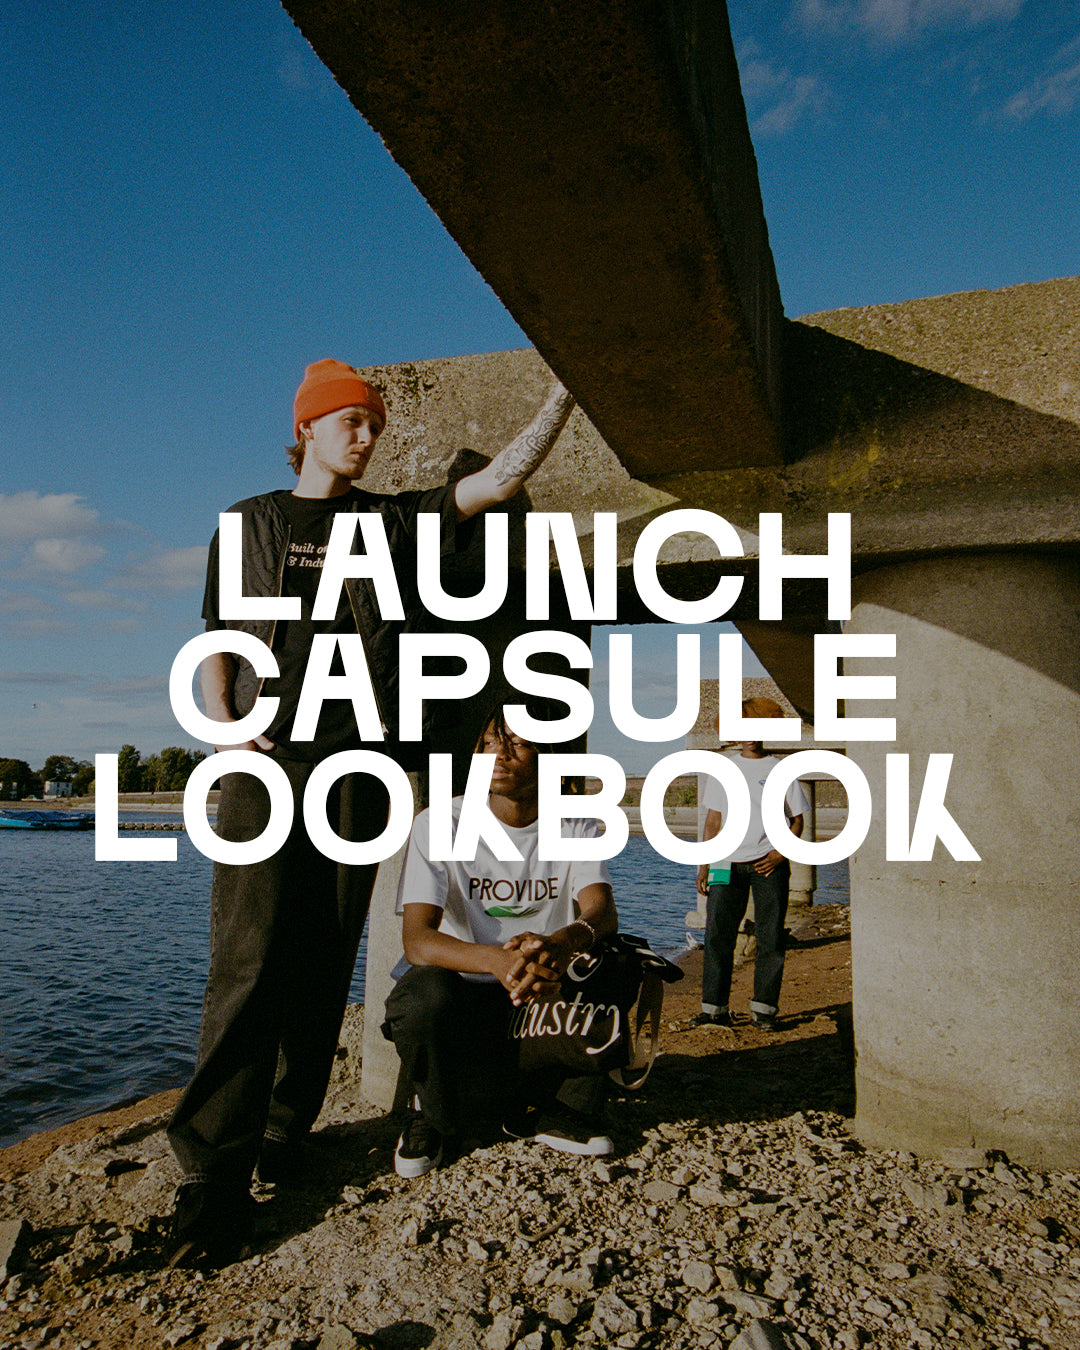 Hero image for Provide's launch capsule lookbook.